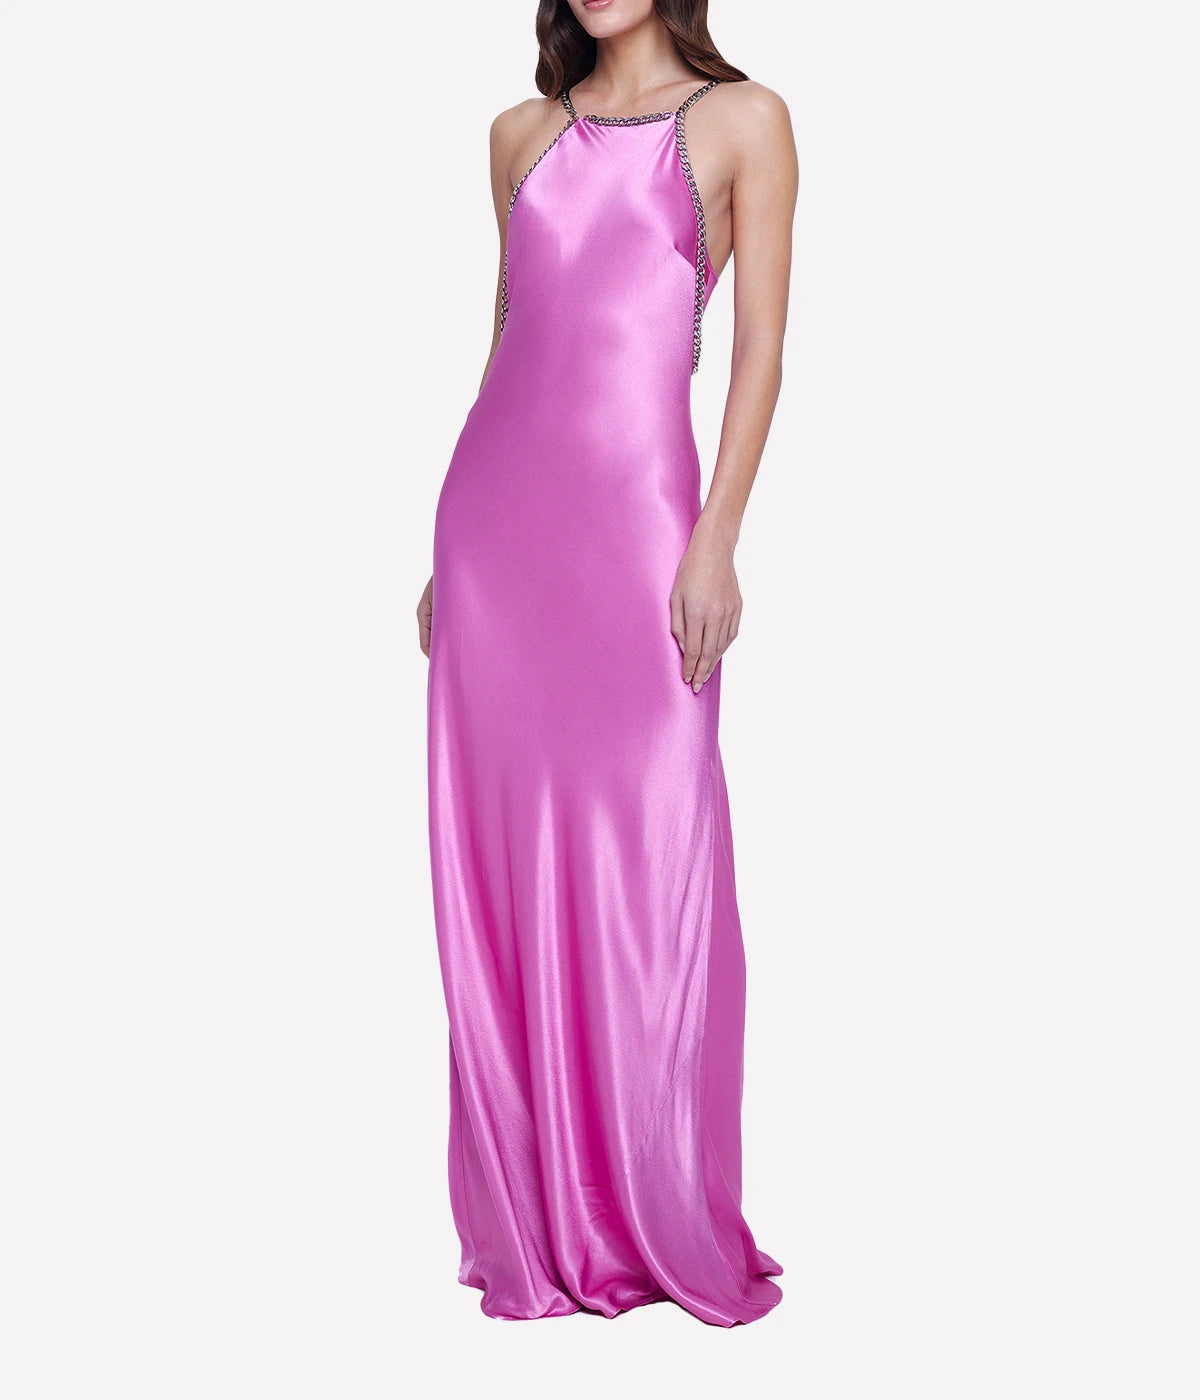 Majest Dress in Magenta Pink